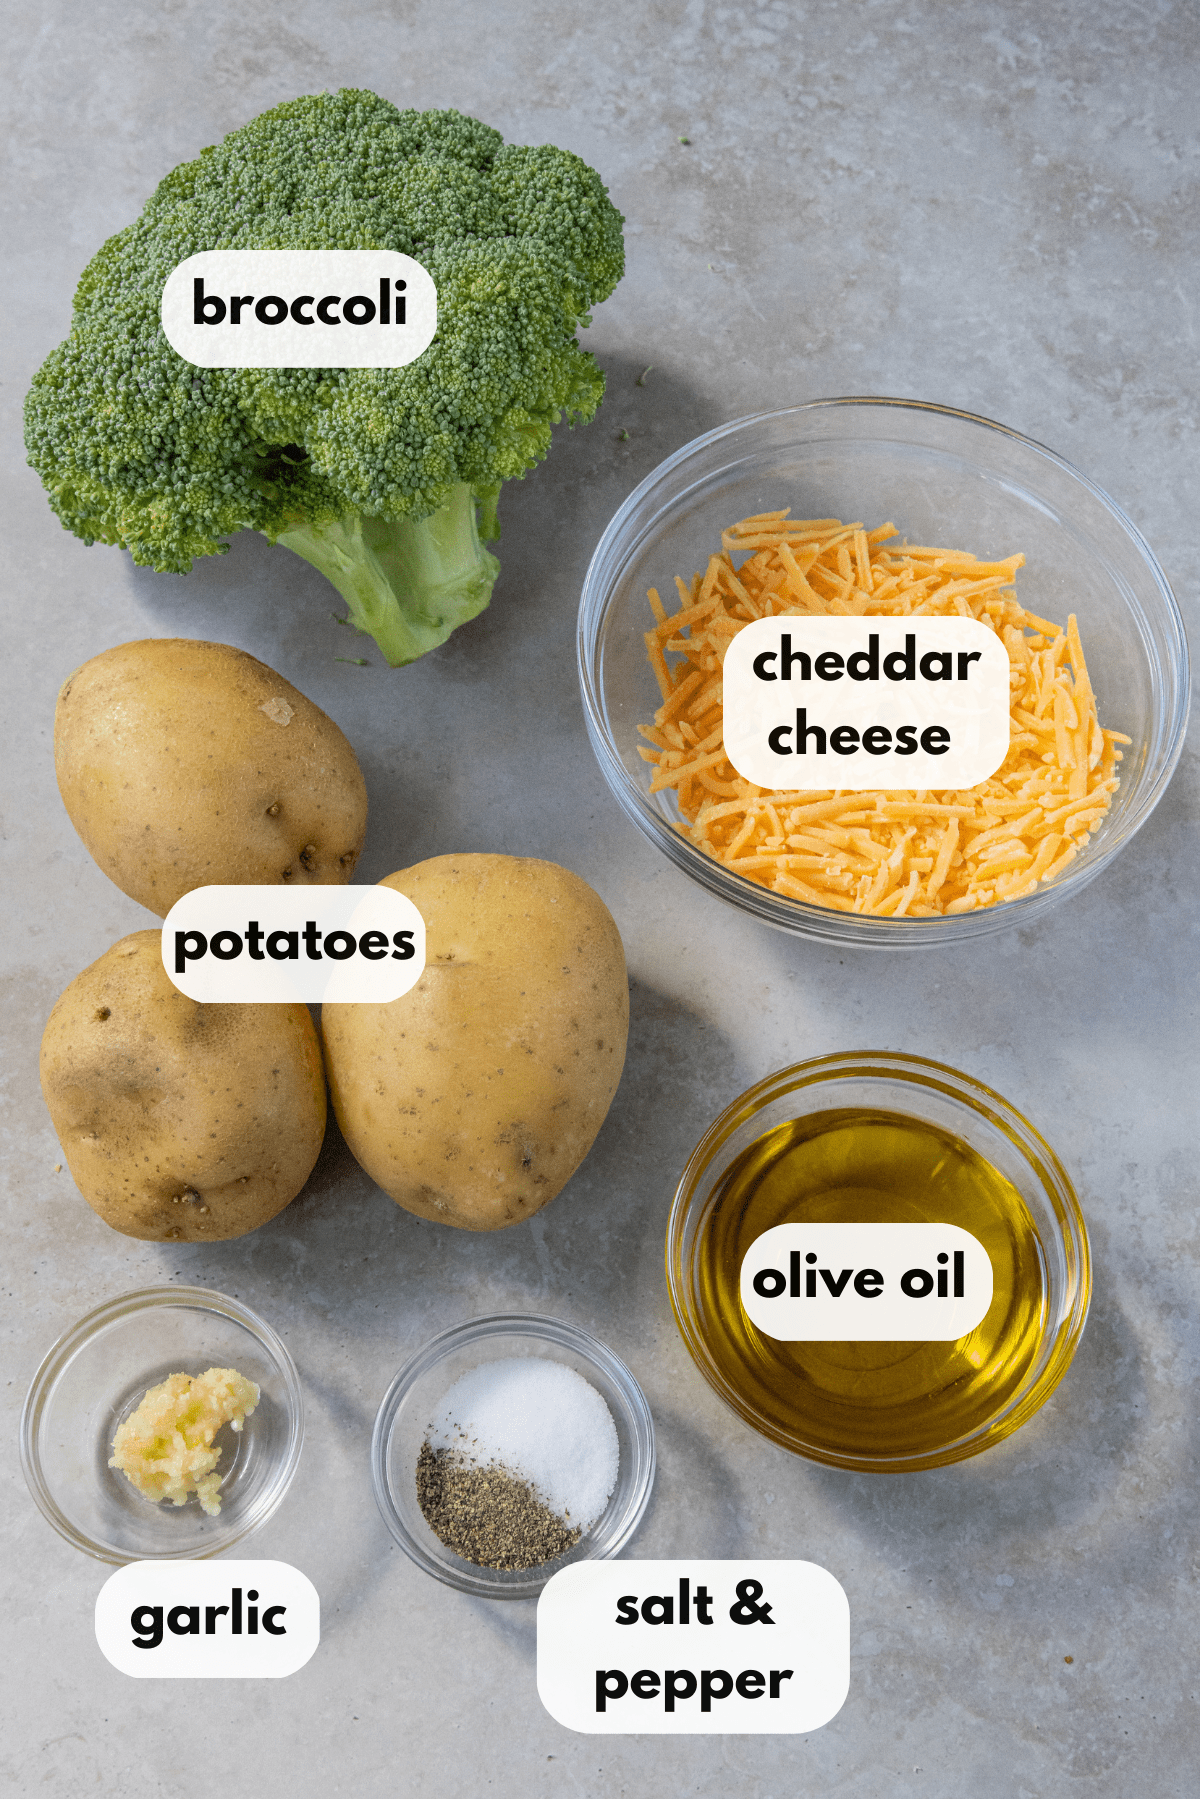 potatoes and broccoli Ingredients